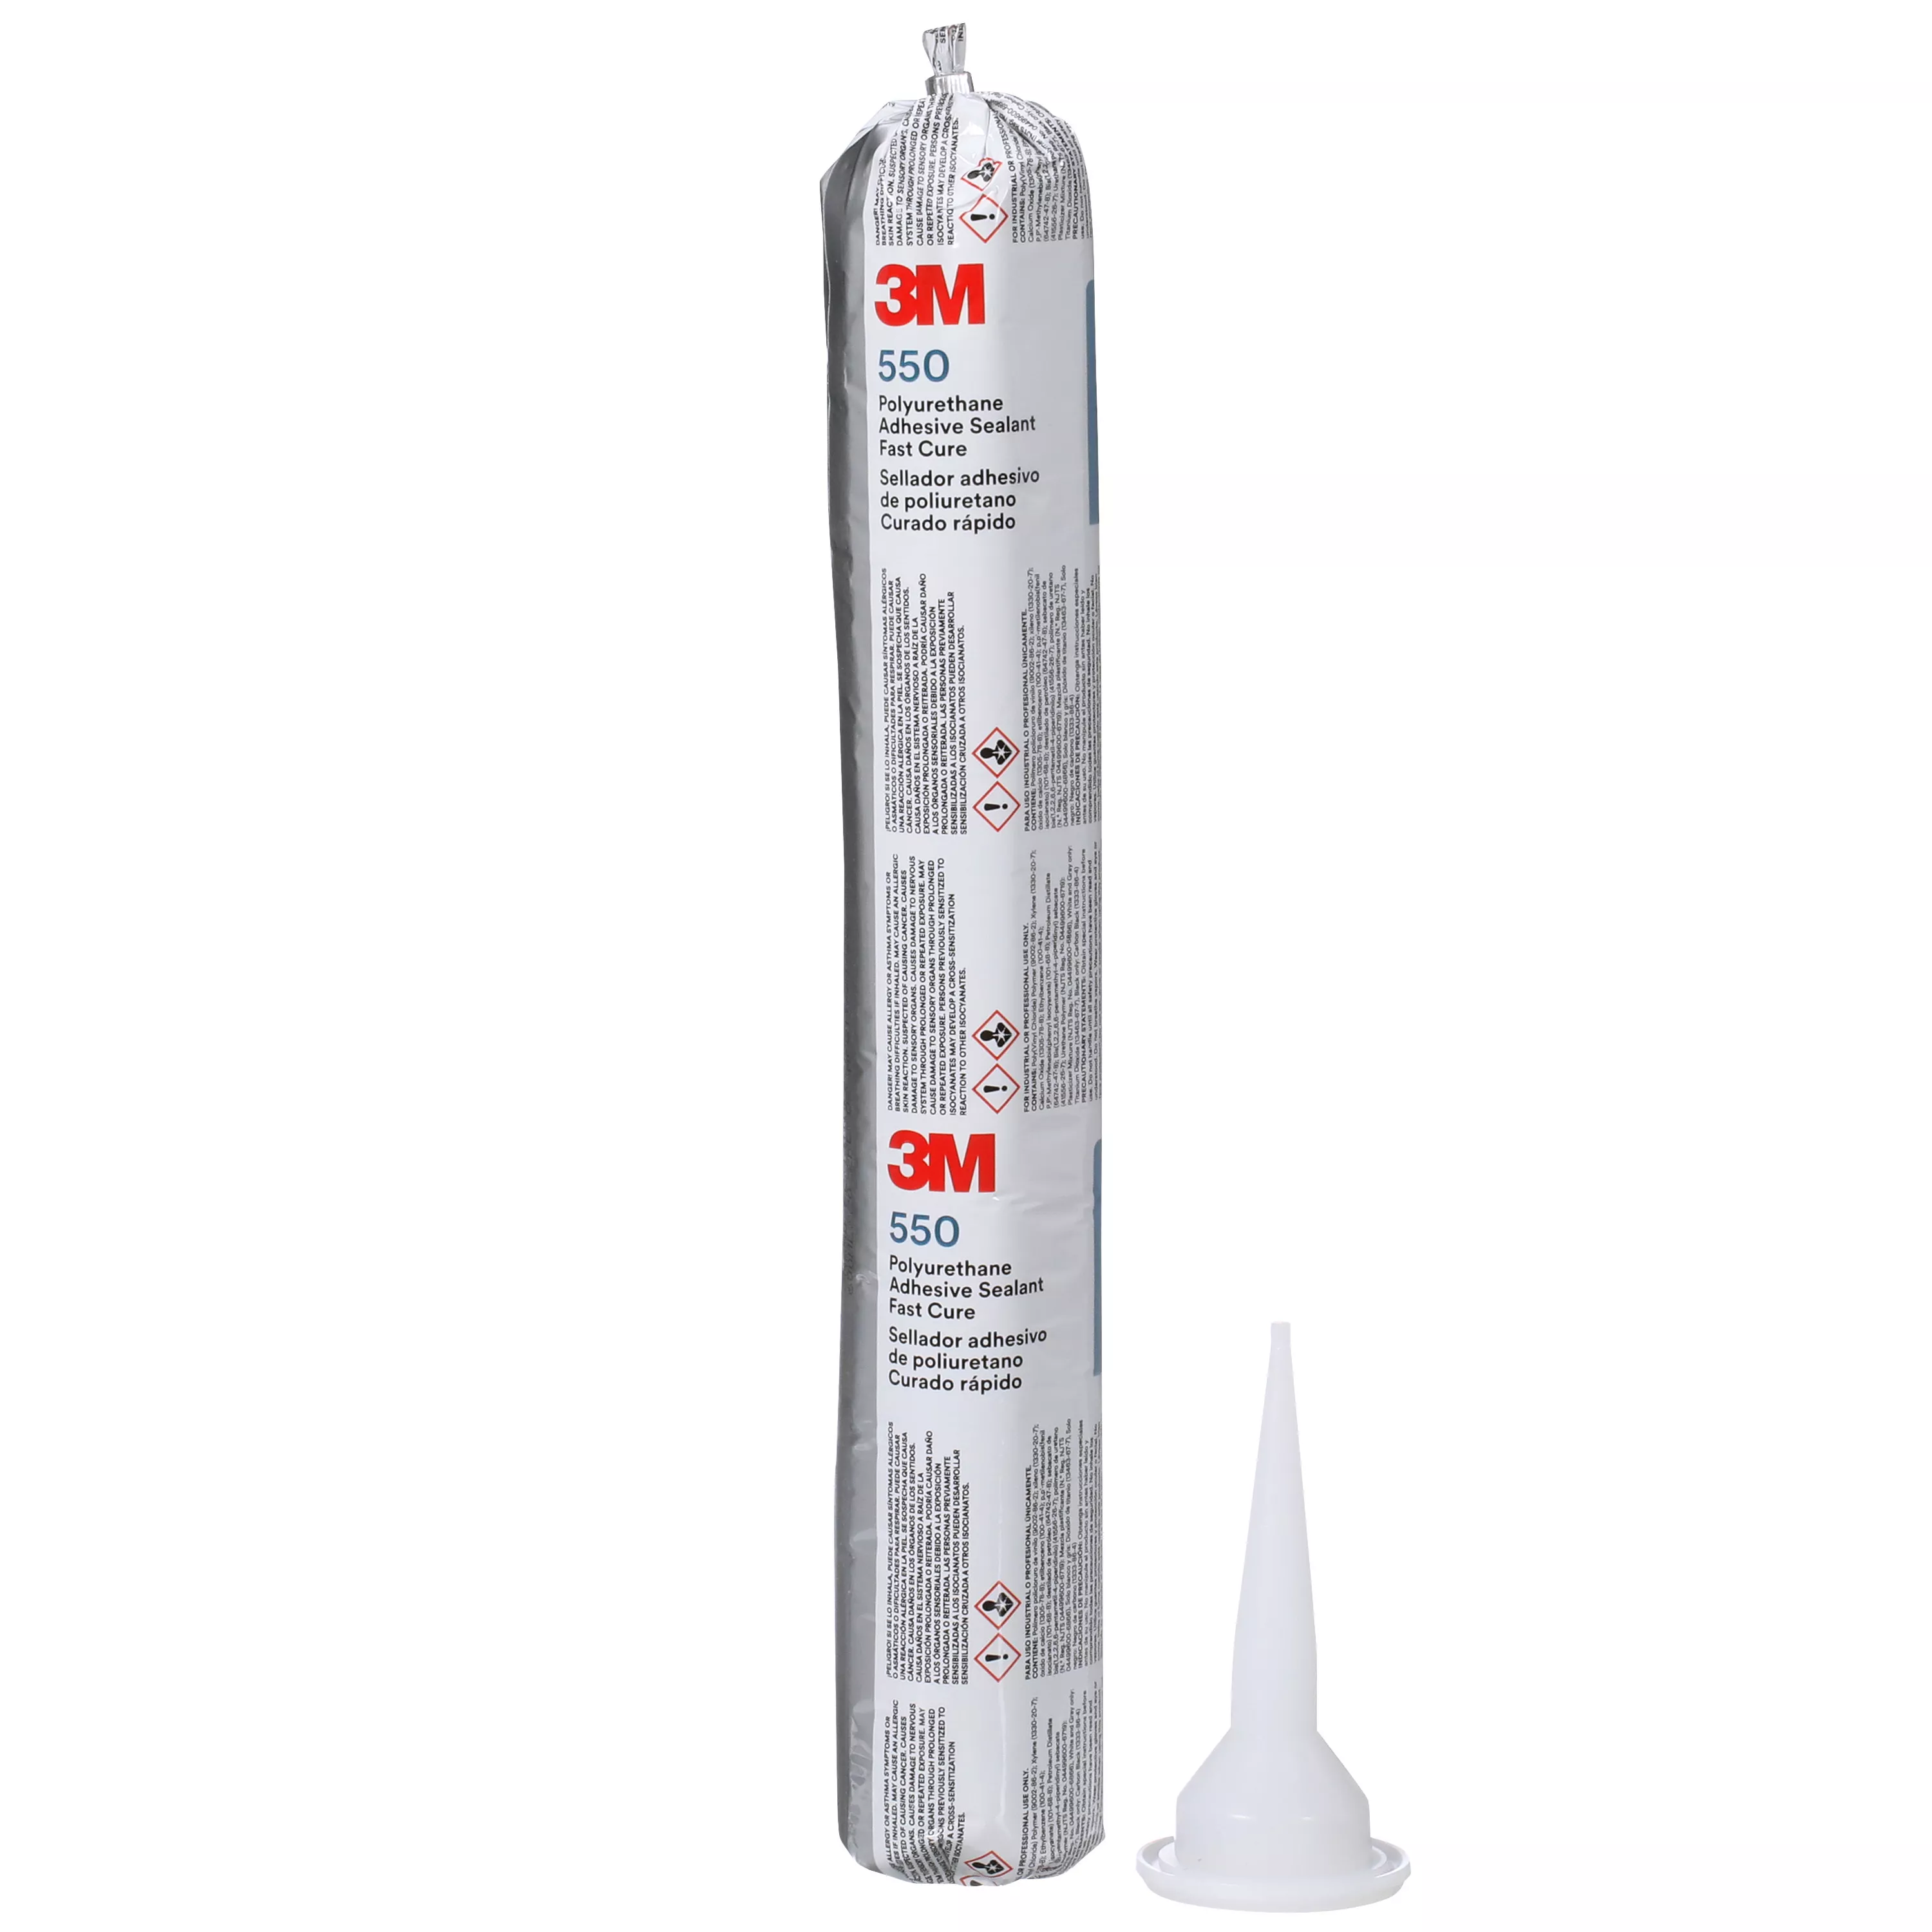 3M™ Polyurethane Adhesive Sealant 550FC Fast Cure, Black, 600 mL Sausage
Pack, 12/Case